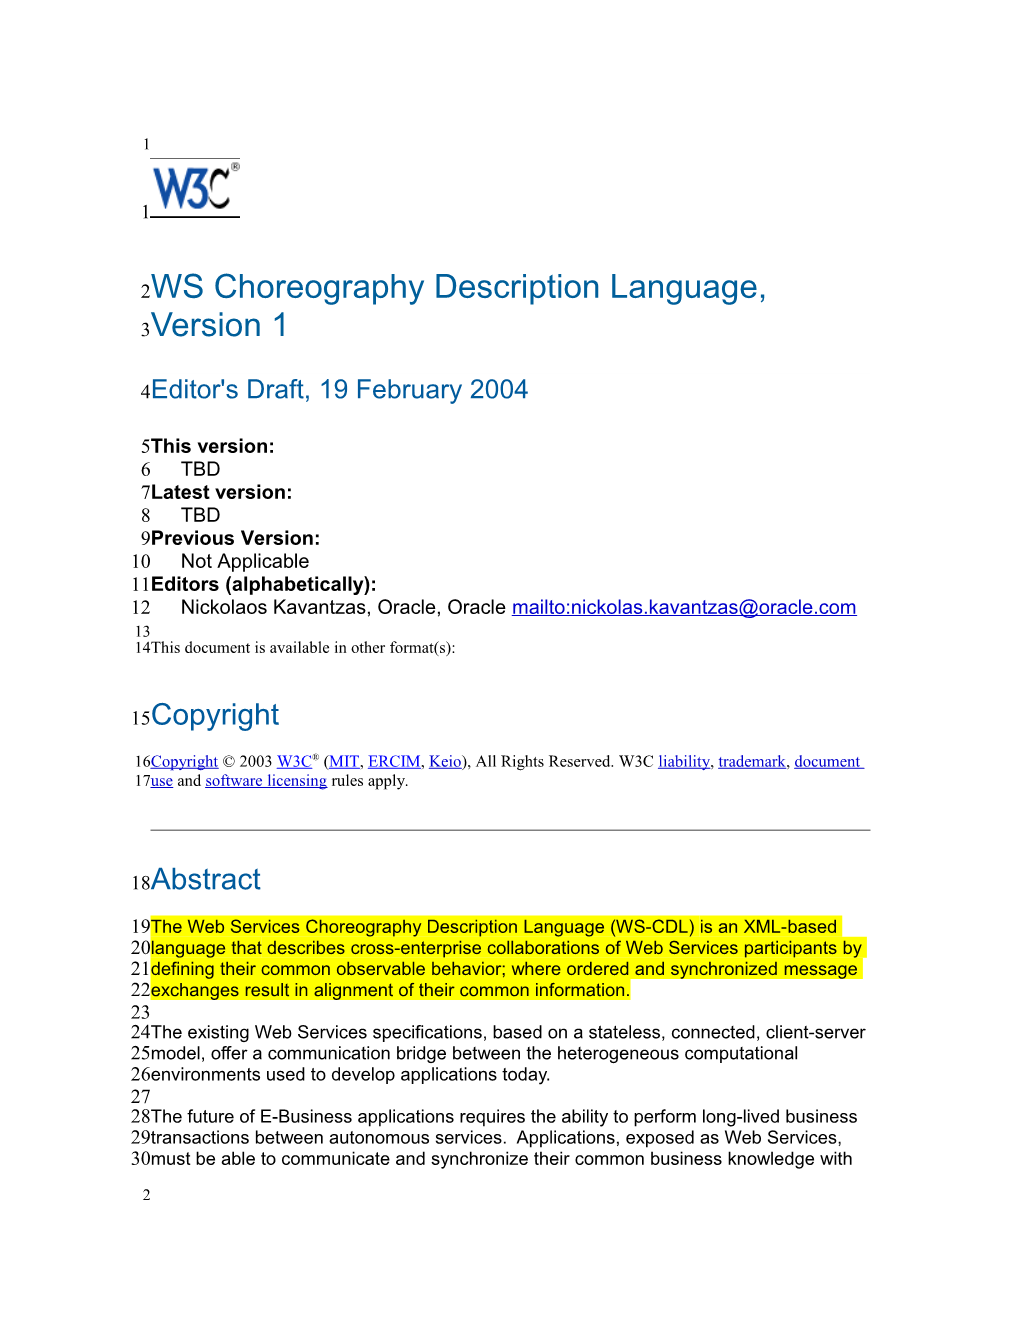 WS Choreography Description Language, Version 1